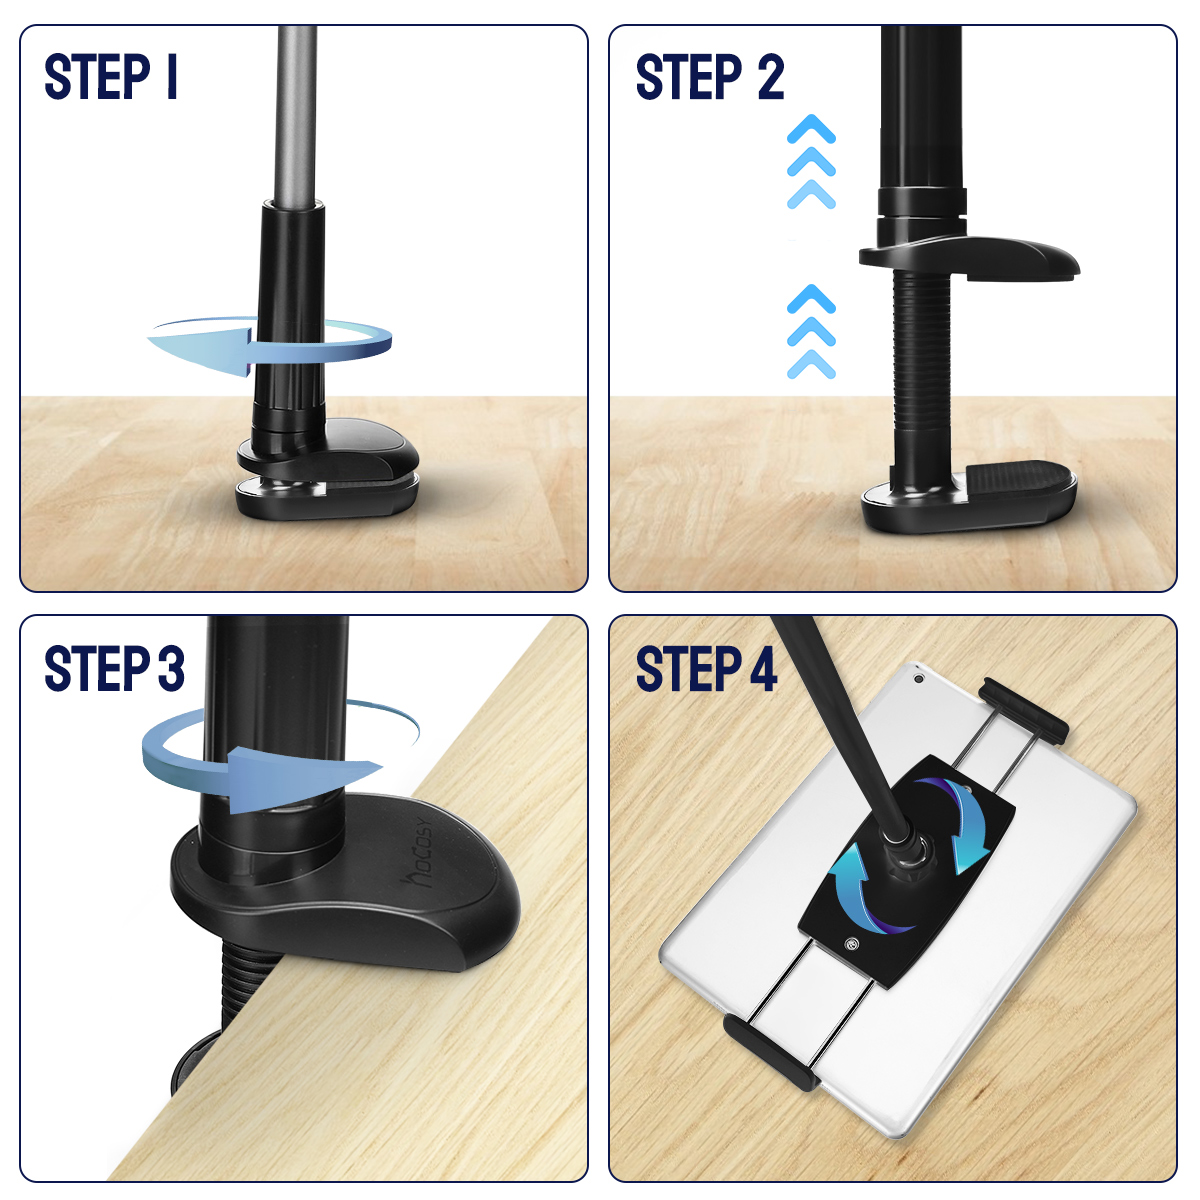 Flexible-Long-Arm-Lazy-Holder-for-Bed-Desk-Desktop-Office-Kitchen-Phone-Holder-Mobile-Phone-Stand-Ho-1788370-8